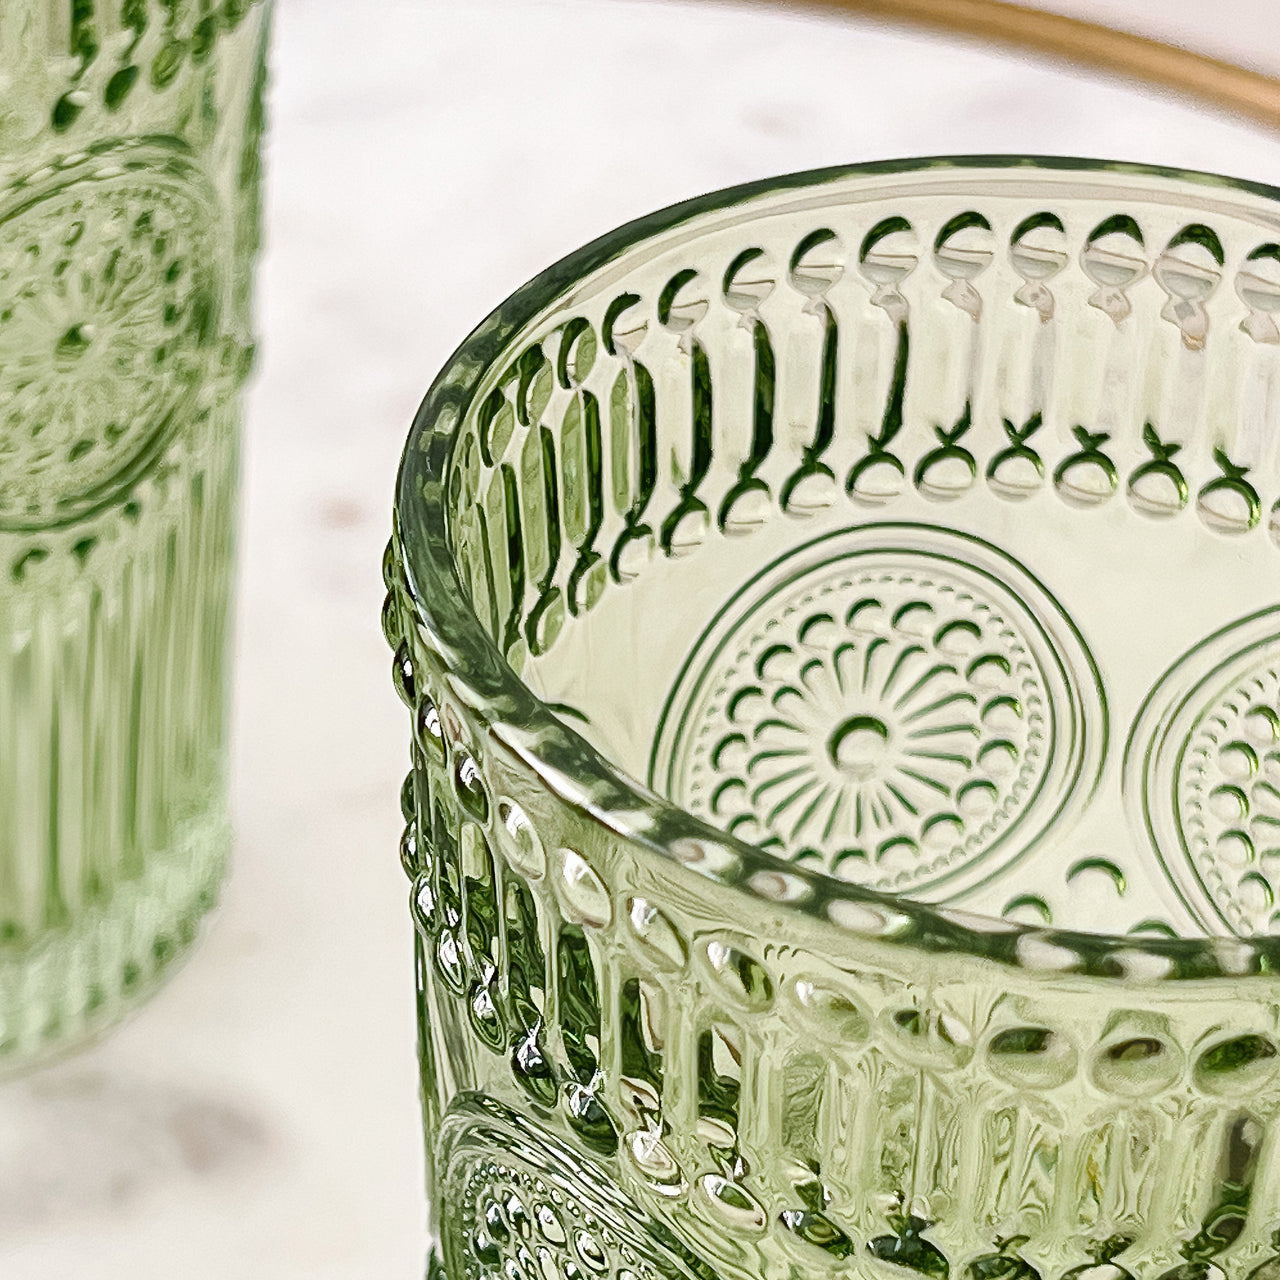 13 oz. Vintage Textured Sage Green Drinking Glass Cups (Set of 6) - Alternate Image 4 | My Wedding Favors